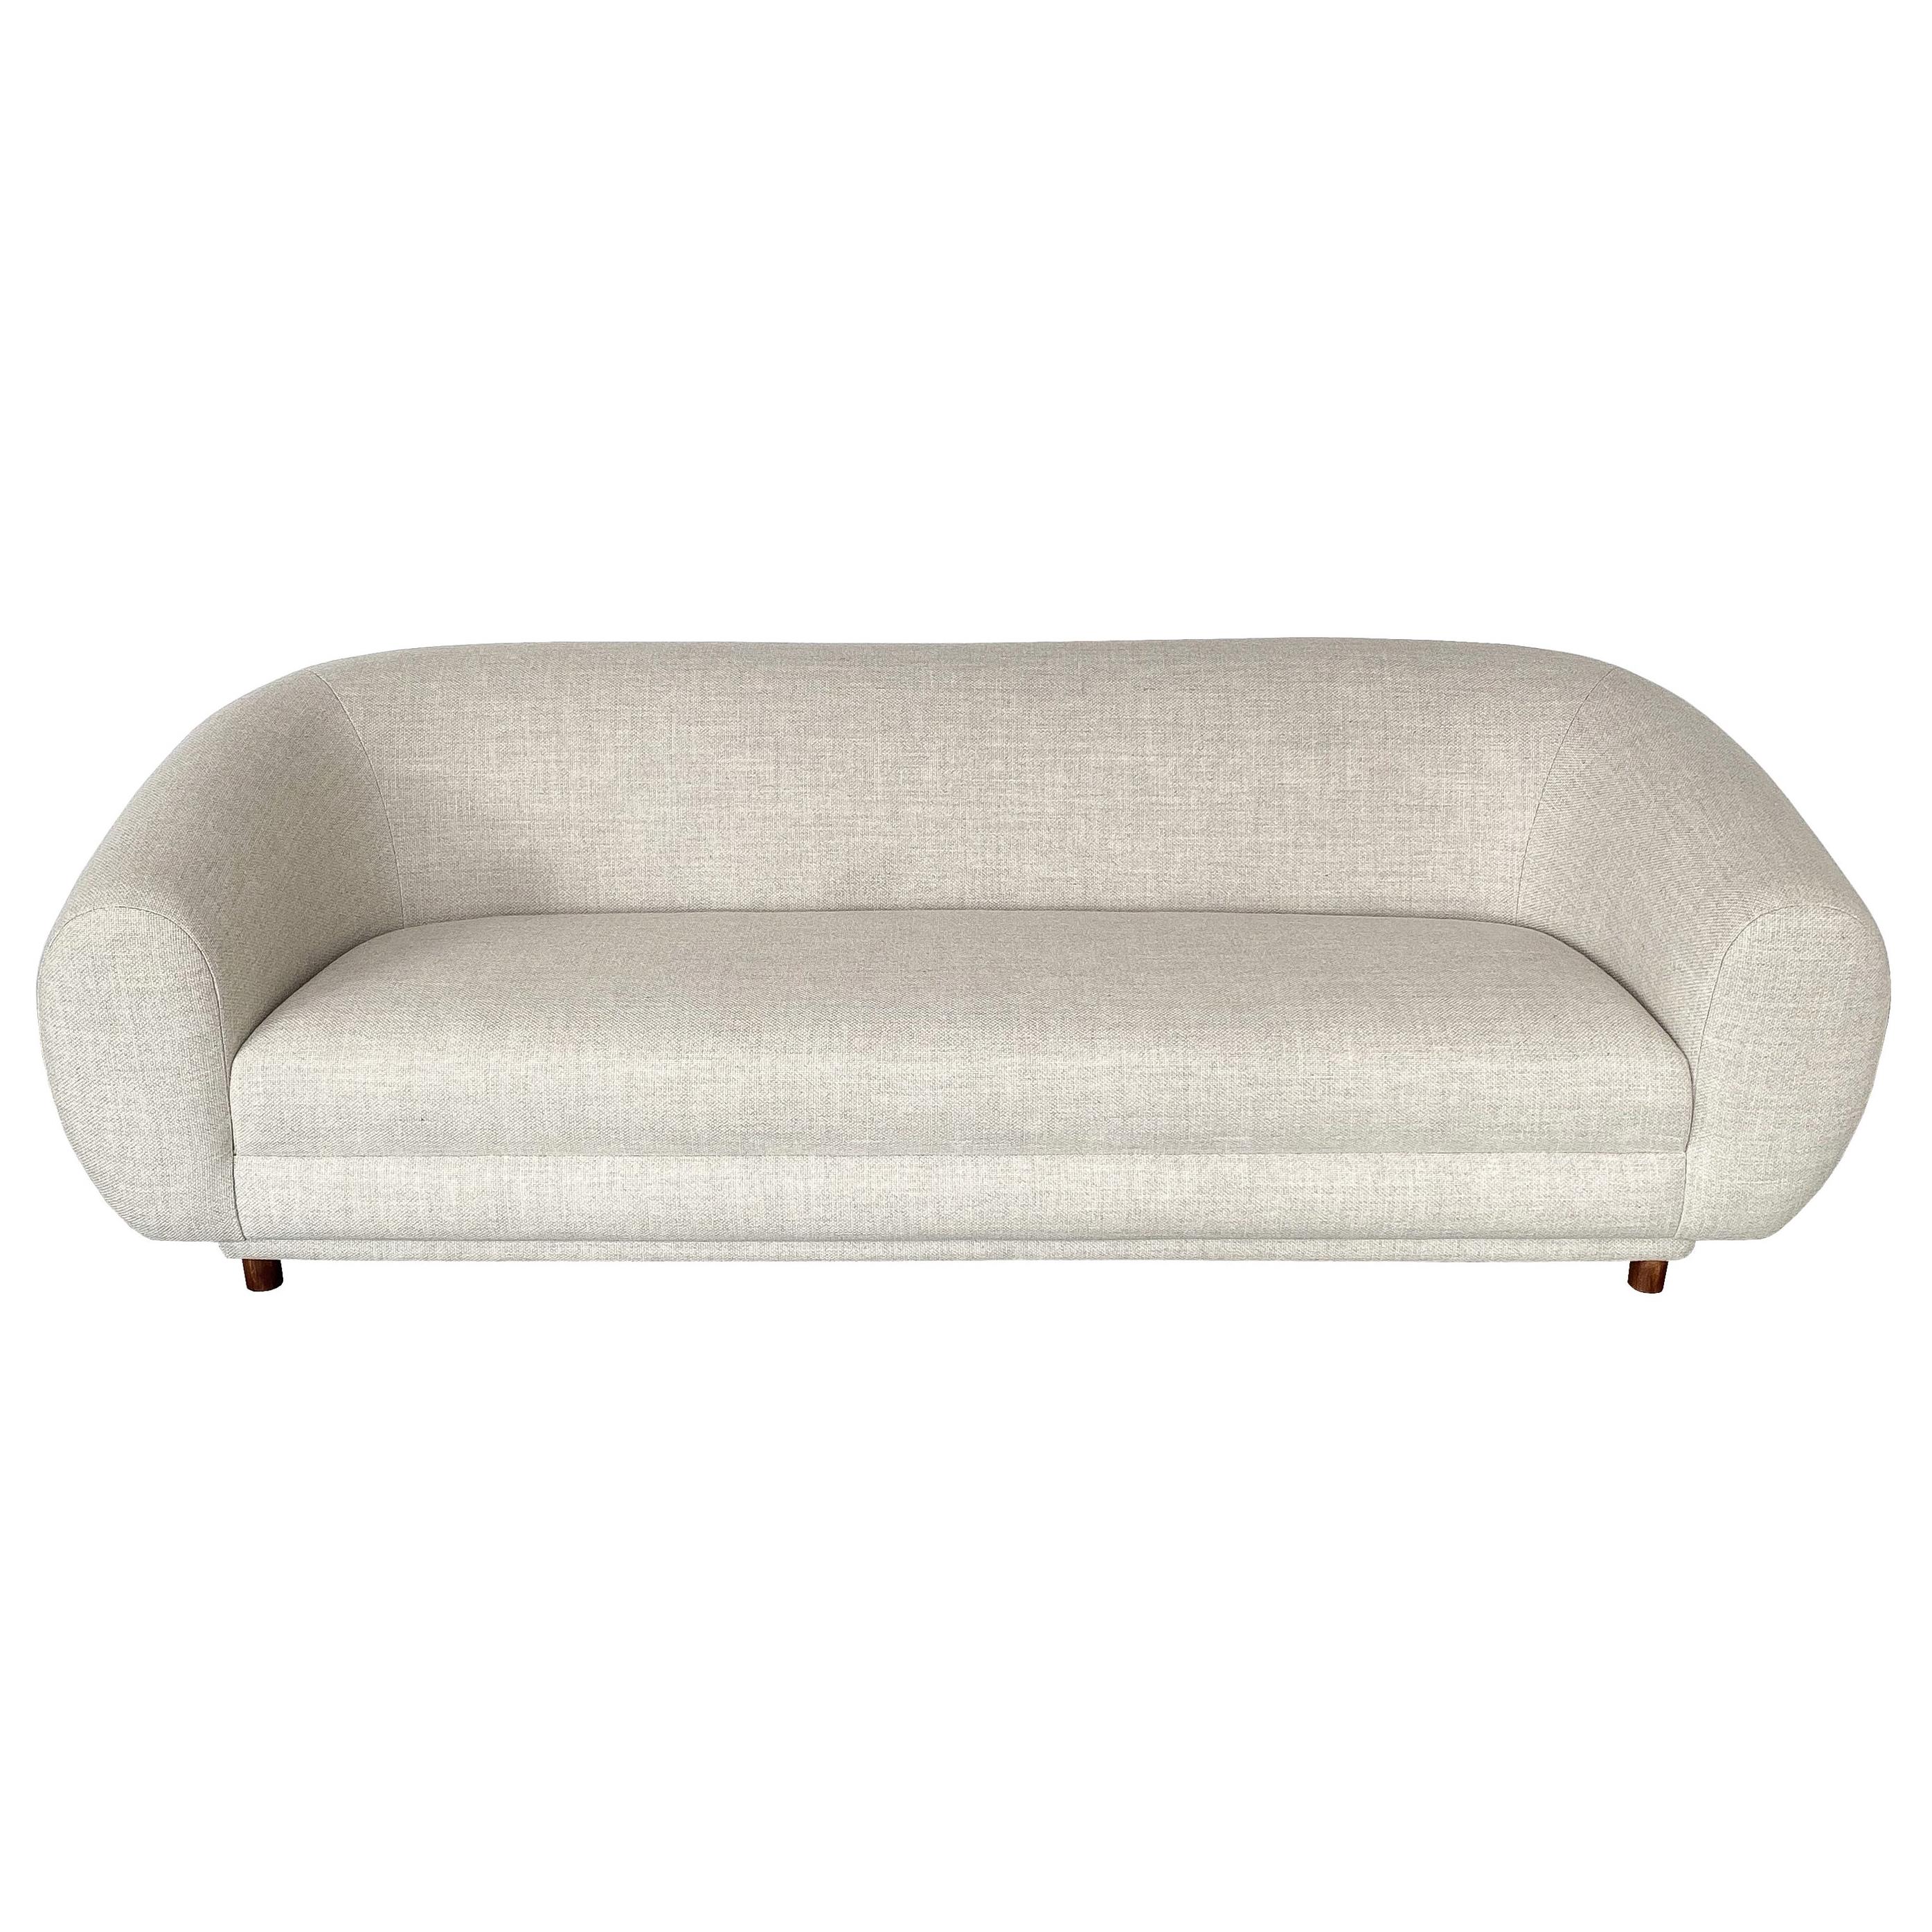 Overstuffed Polar Bear Style Sofa